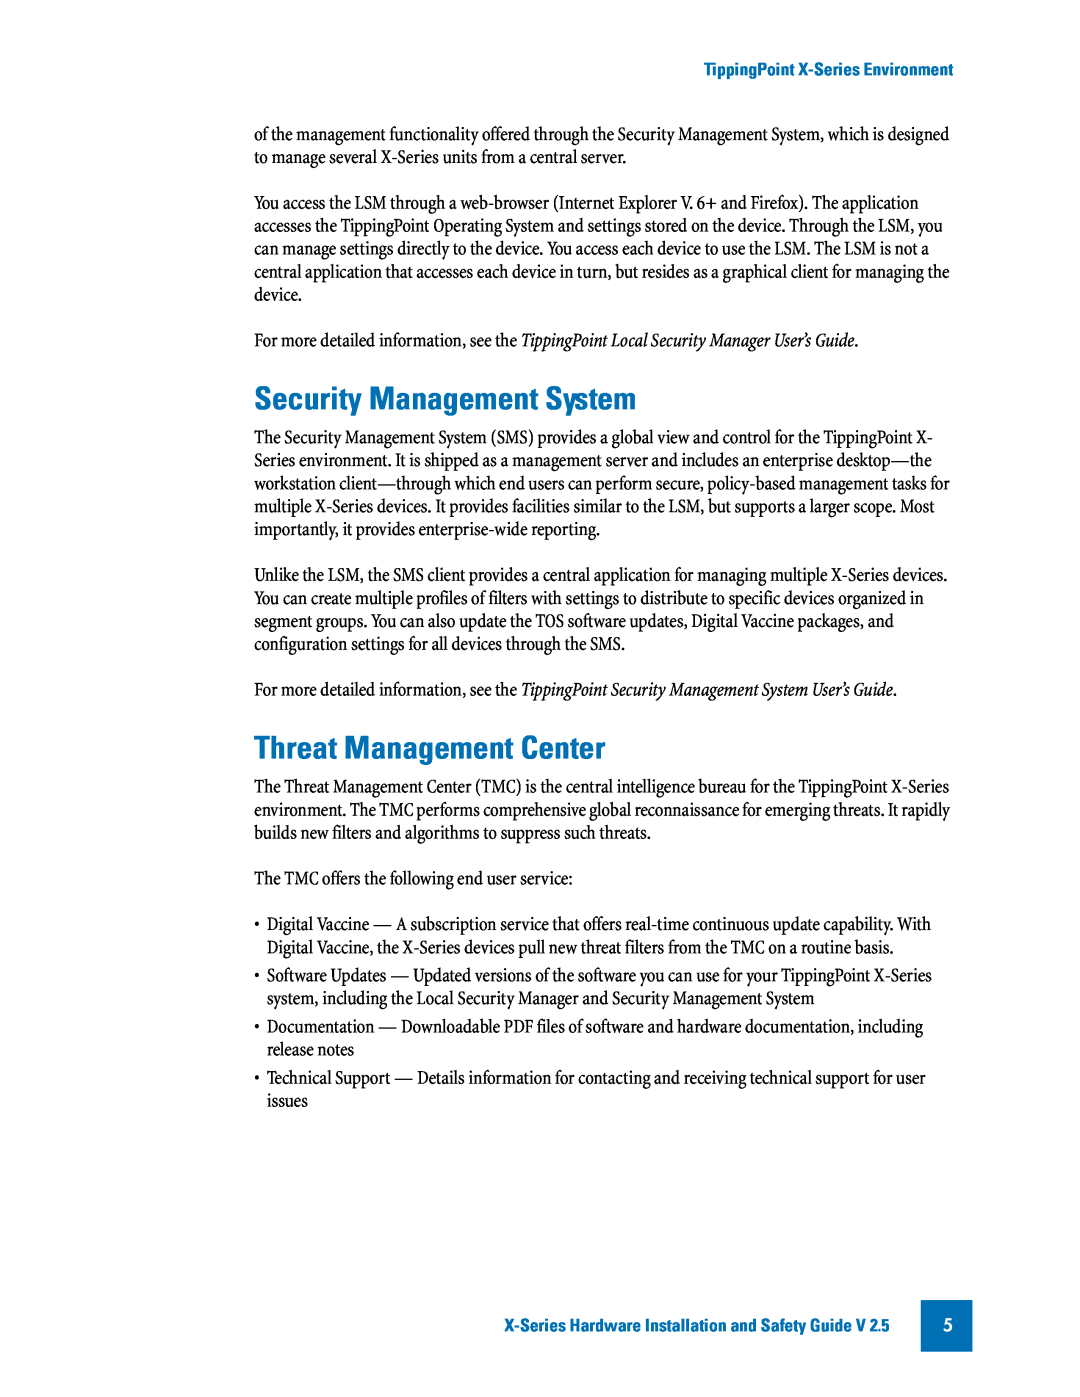 3Com TECHD-0000000122 manual Security Management System, Threat Management Center 